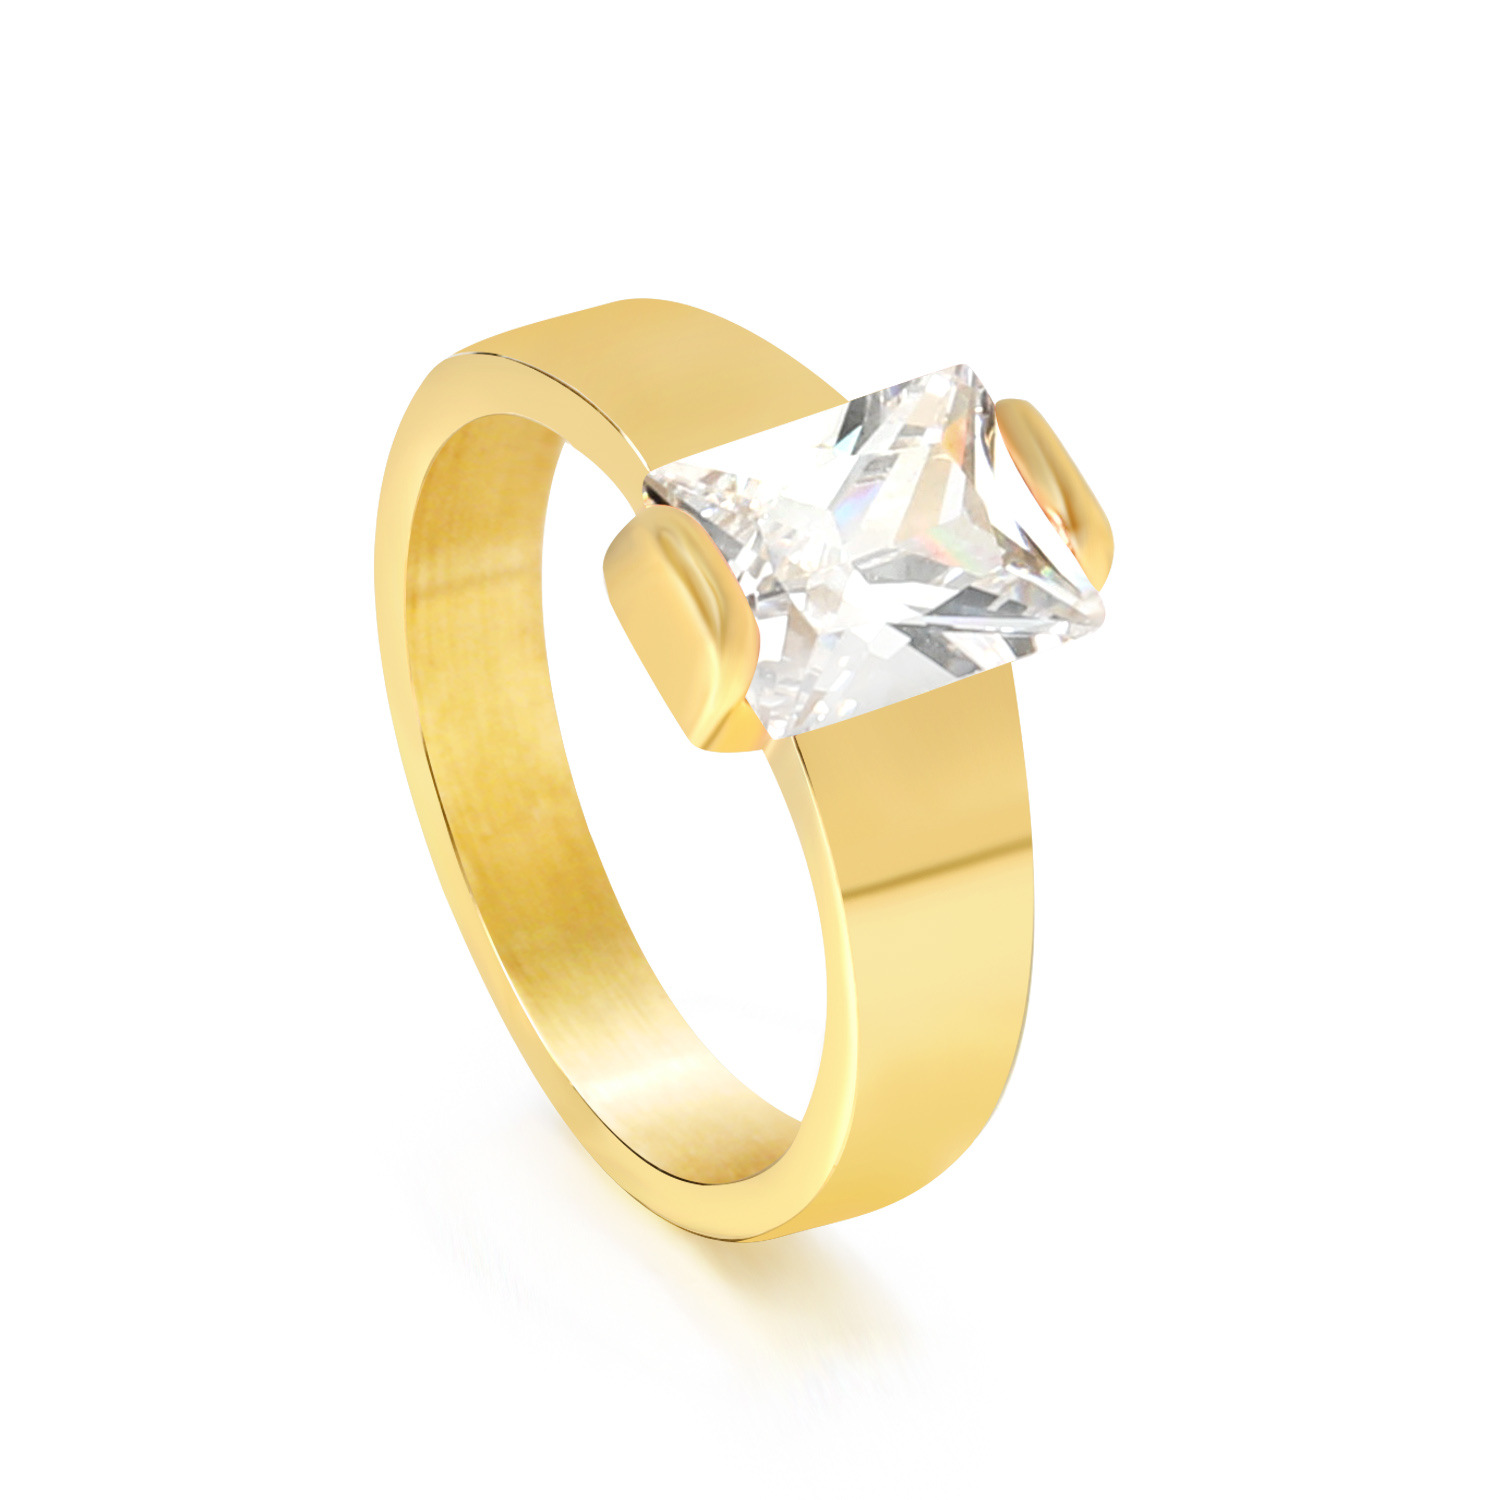 2:White diamond ring Gold RI1455A6-9G